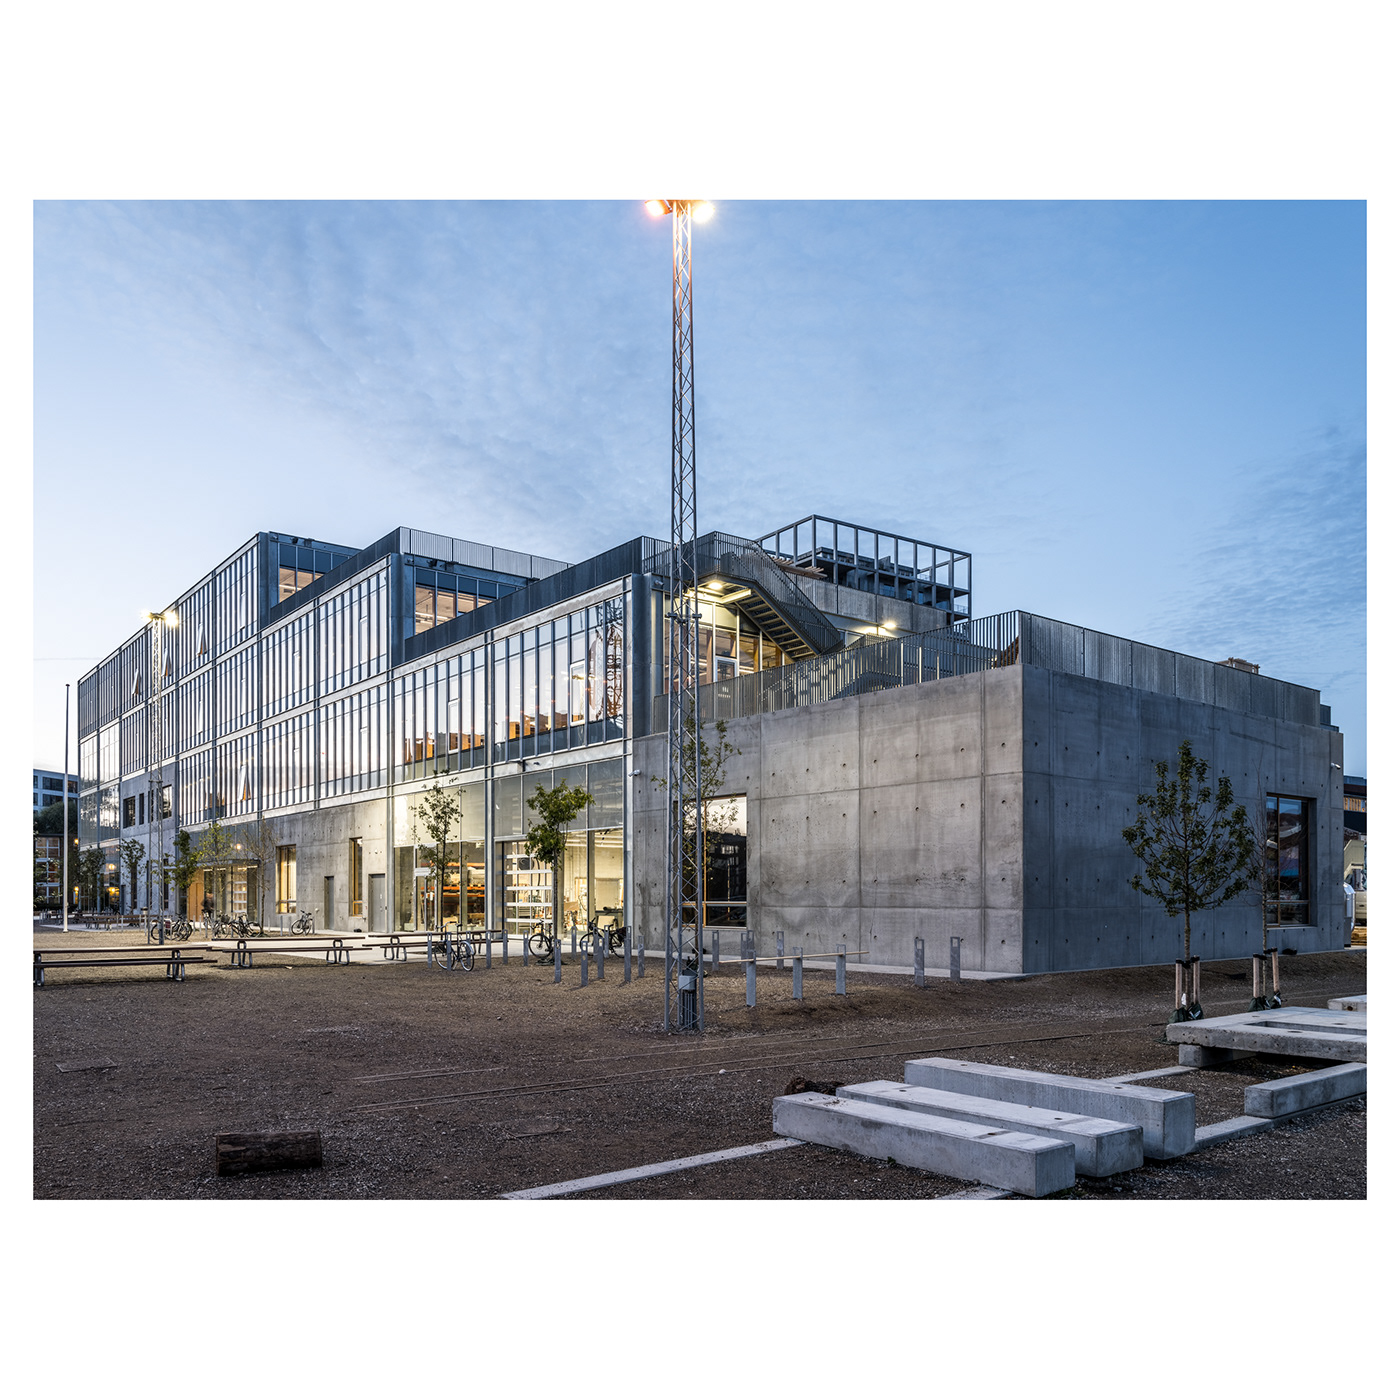 AARCH architecture architecture school concrete creative danish Education glass nordic Scandinavia